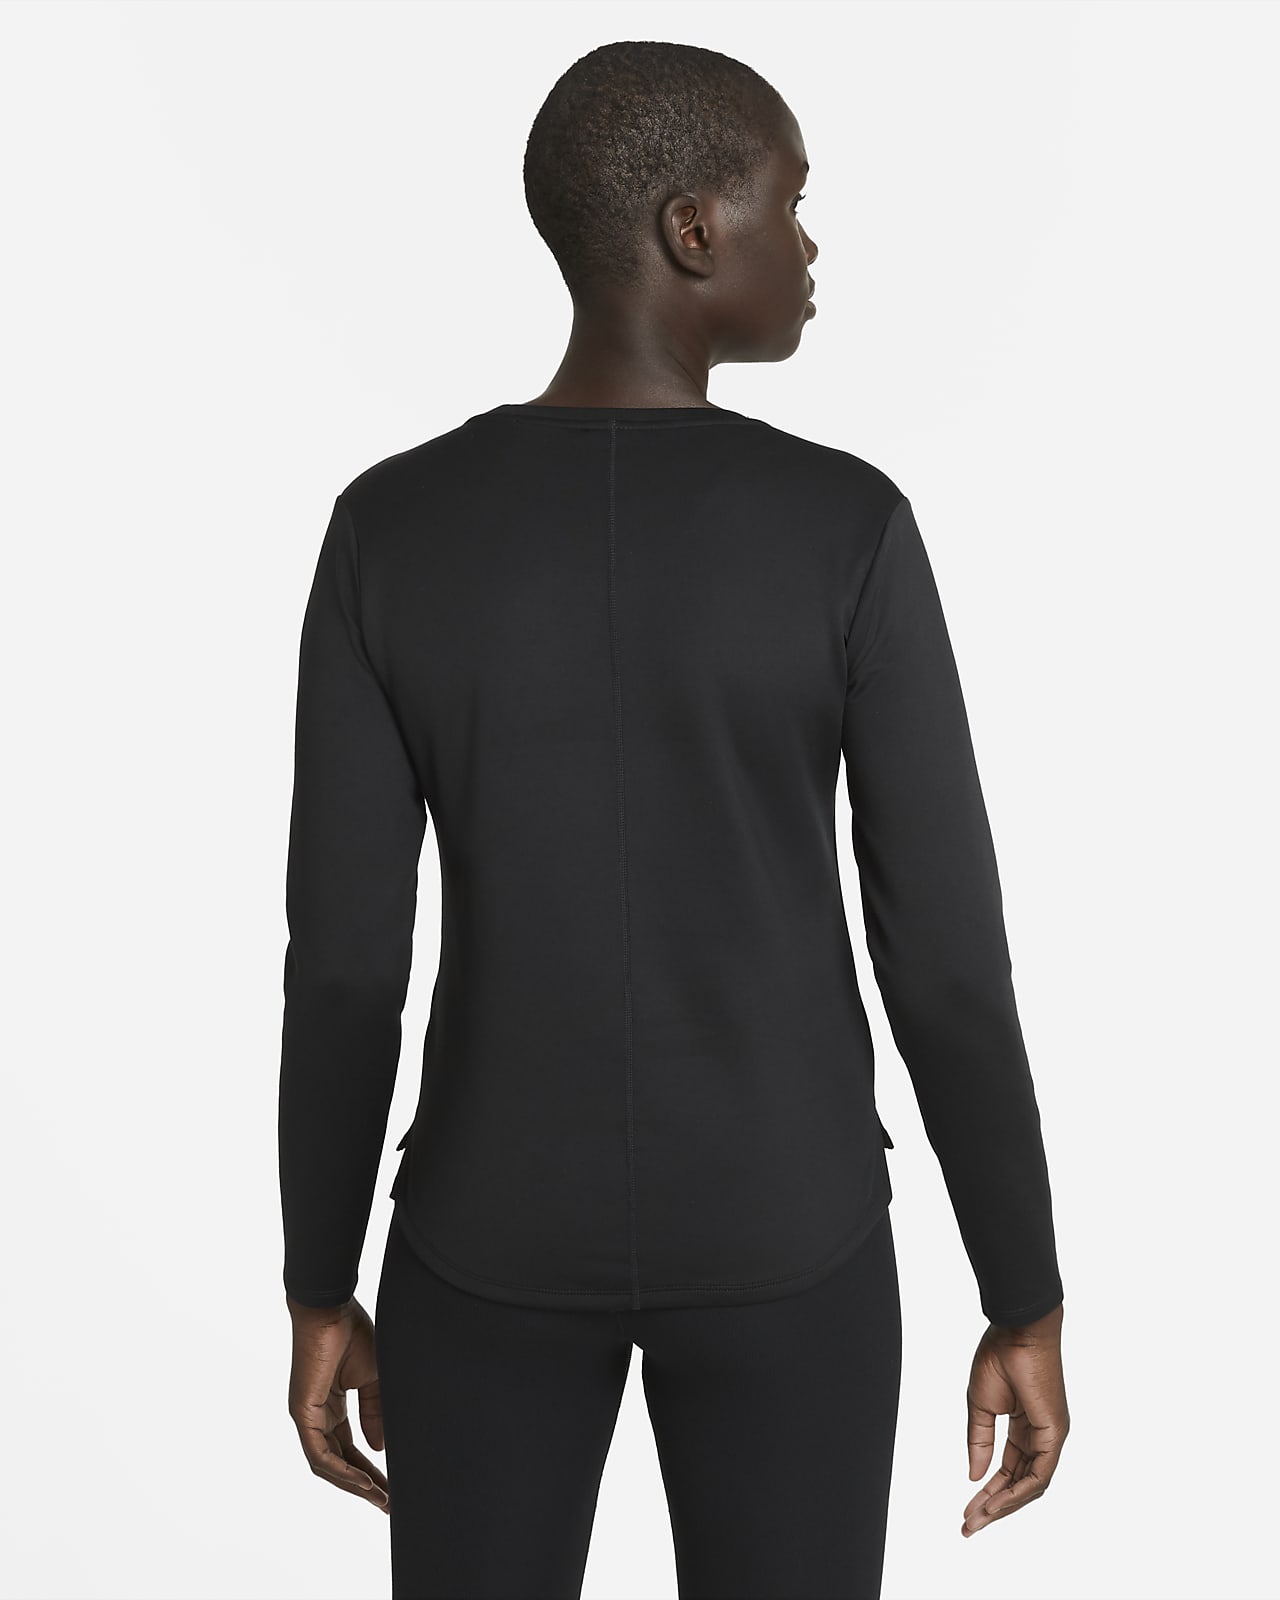 Nike The One Dri-FIT Long Sleeve Top - Black